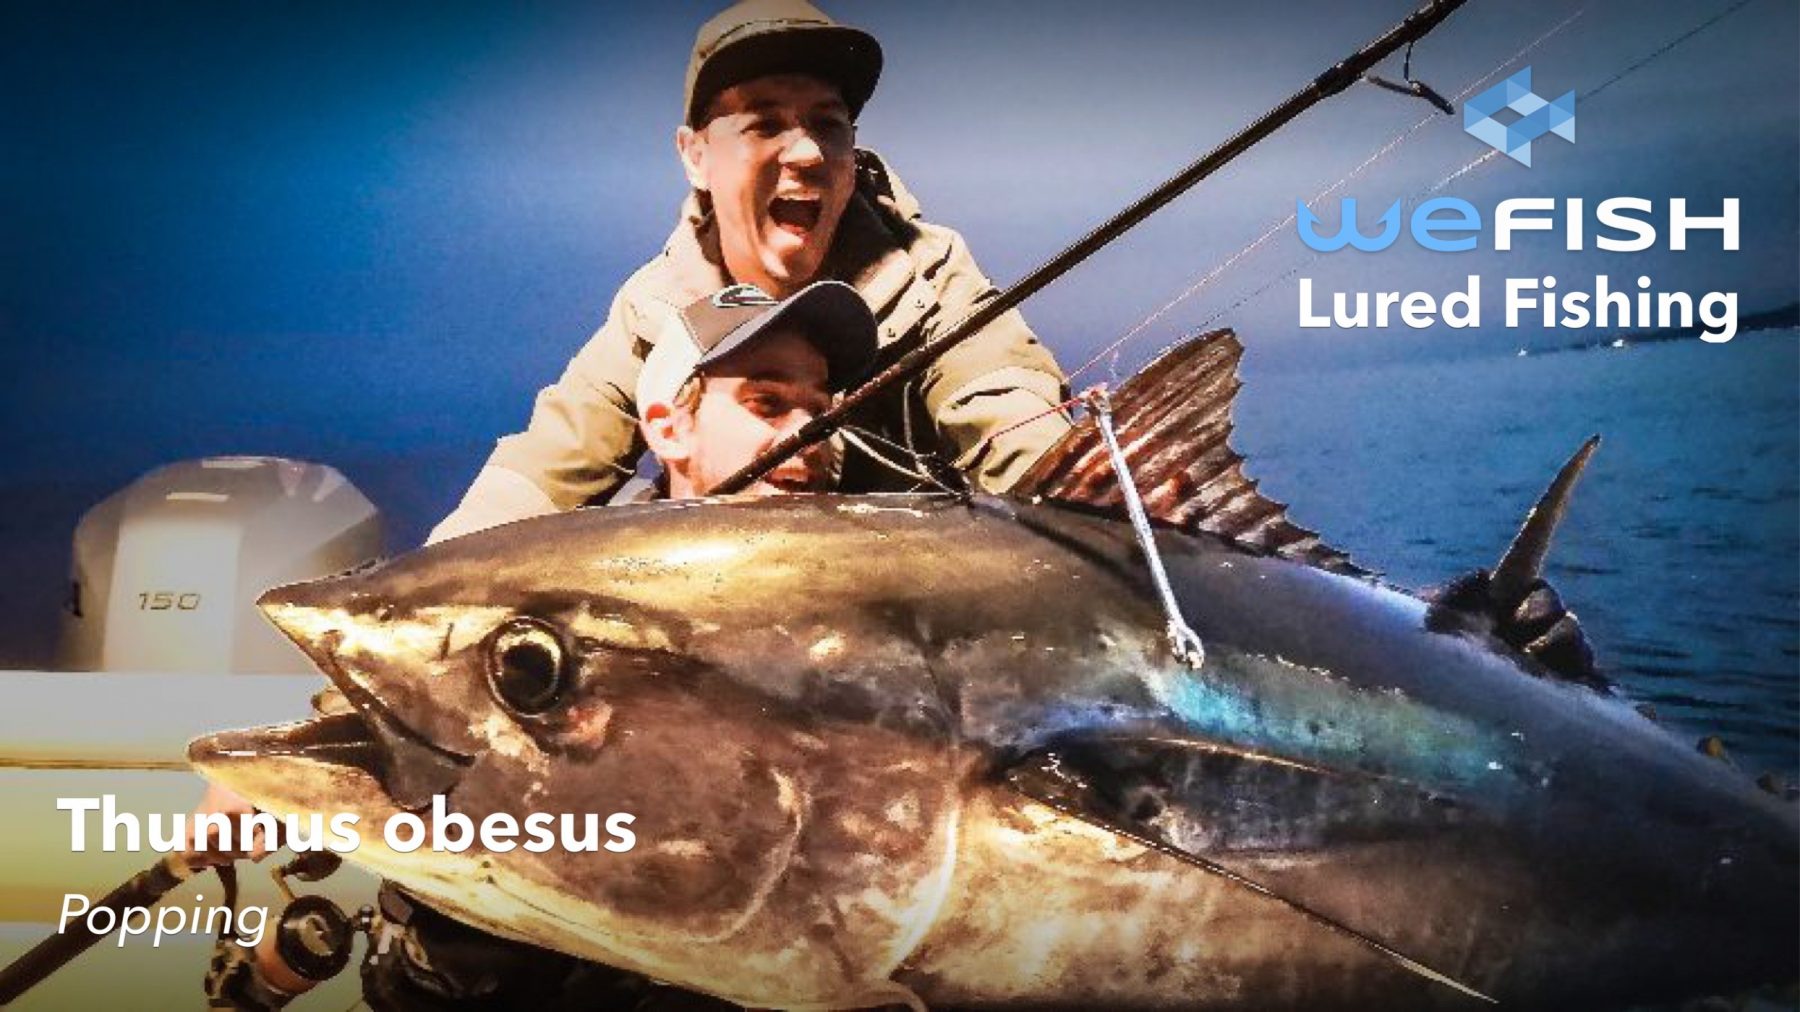 El Mundo de la Pesca en Cádiz: Pesca del Calamar